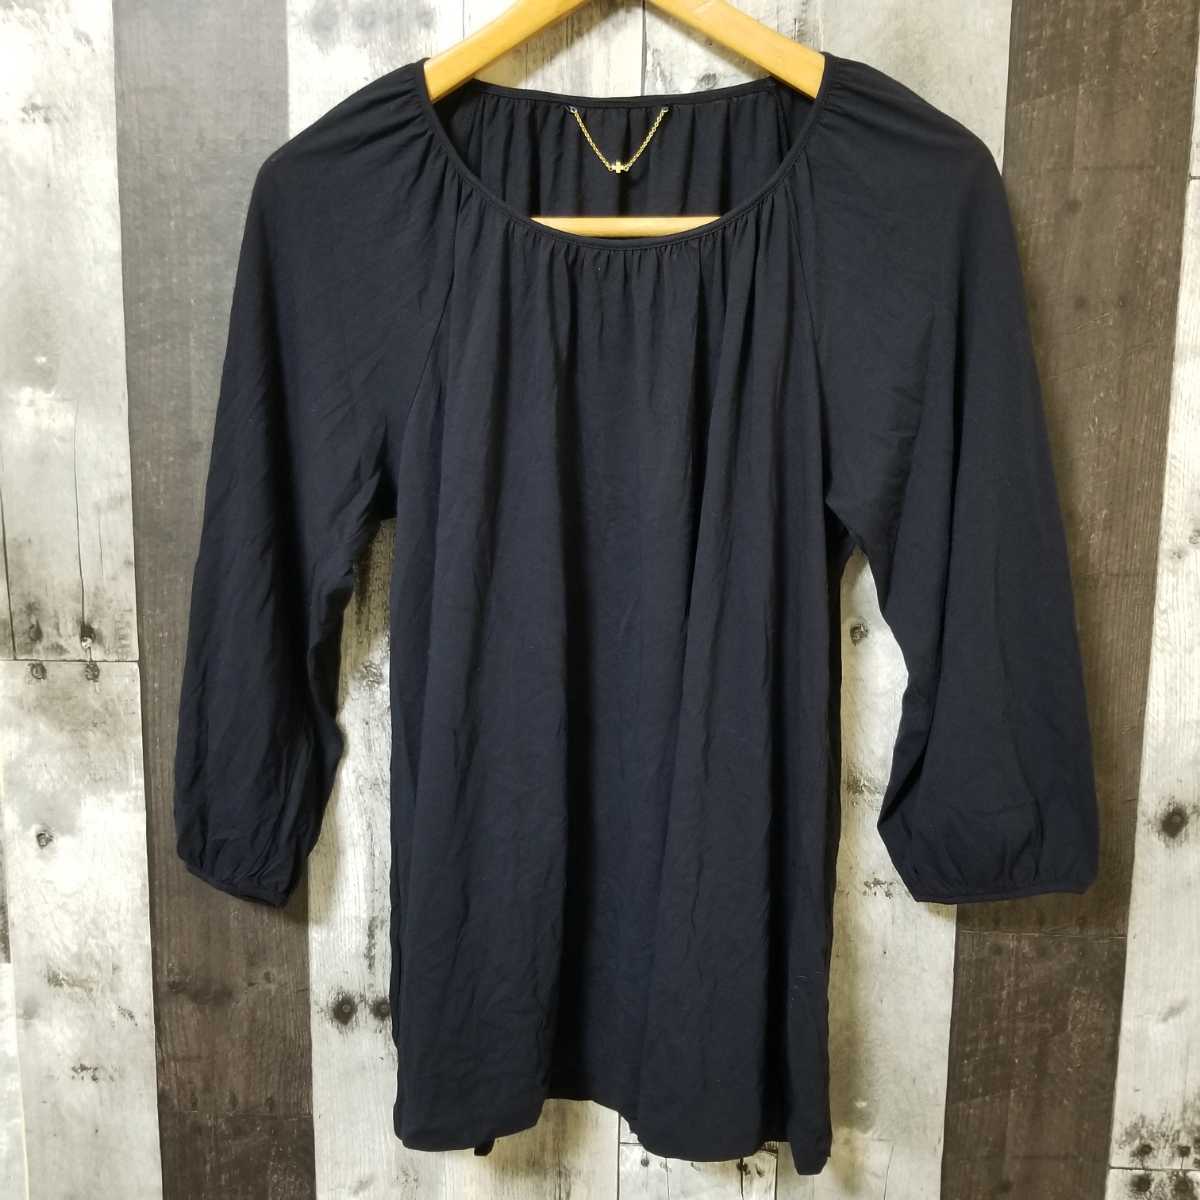  Area Free jiyuuk cut and sewn tops рубашка размер 40 оттенок черного женский 